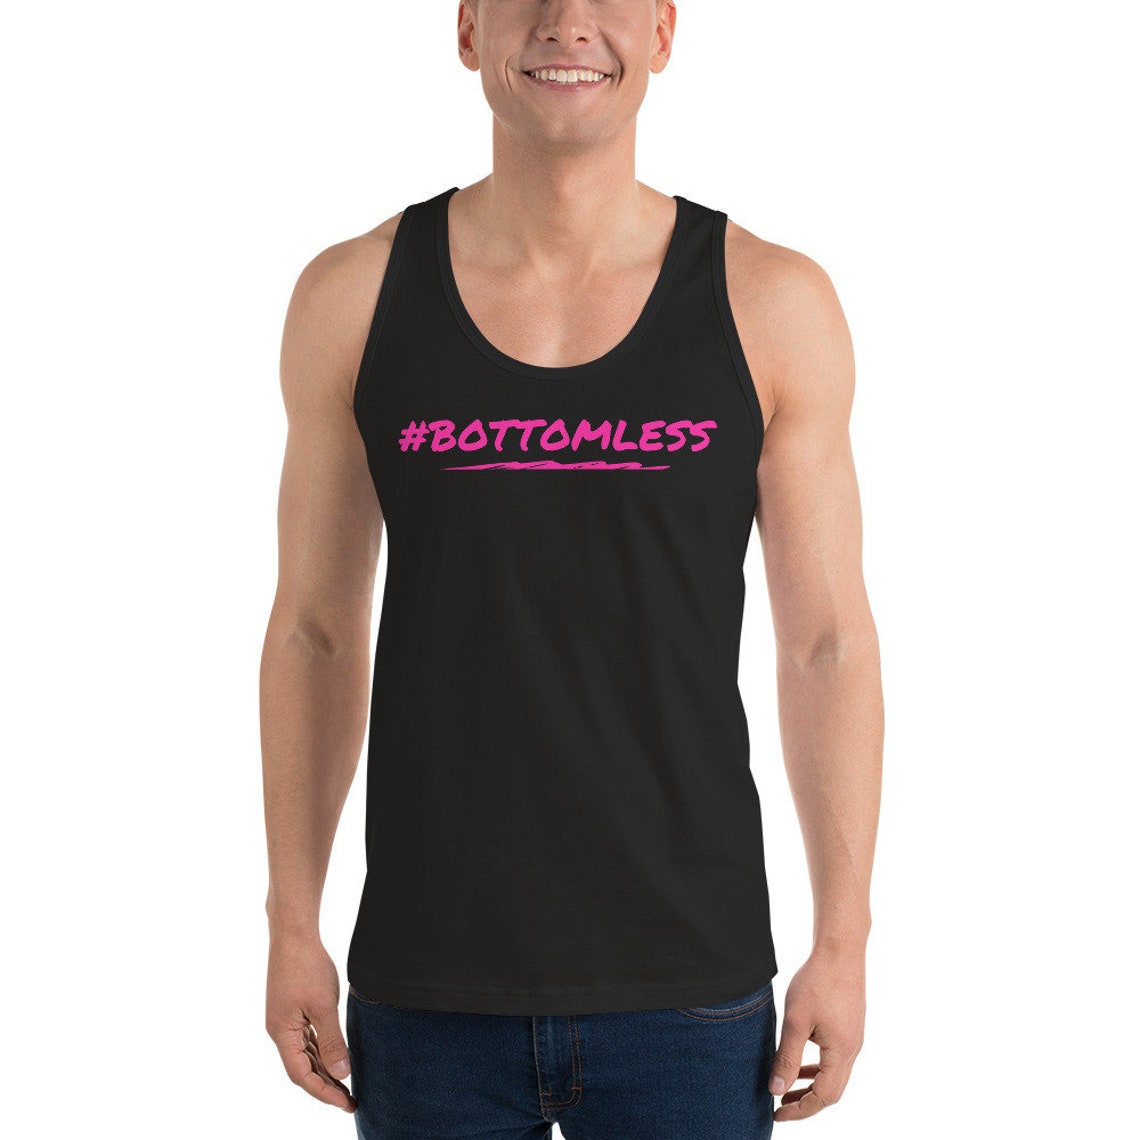 Bottomless tank top unisex | Etsy